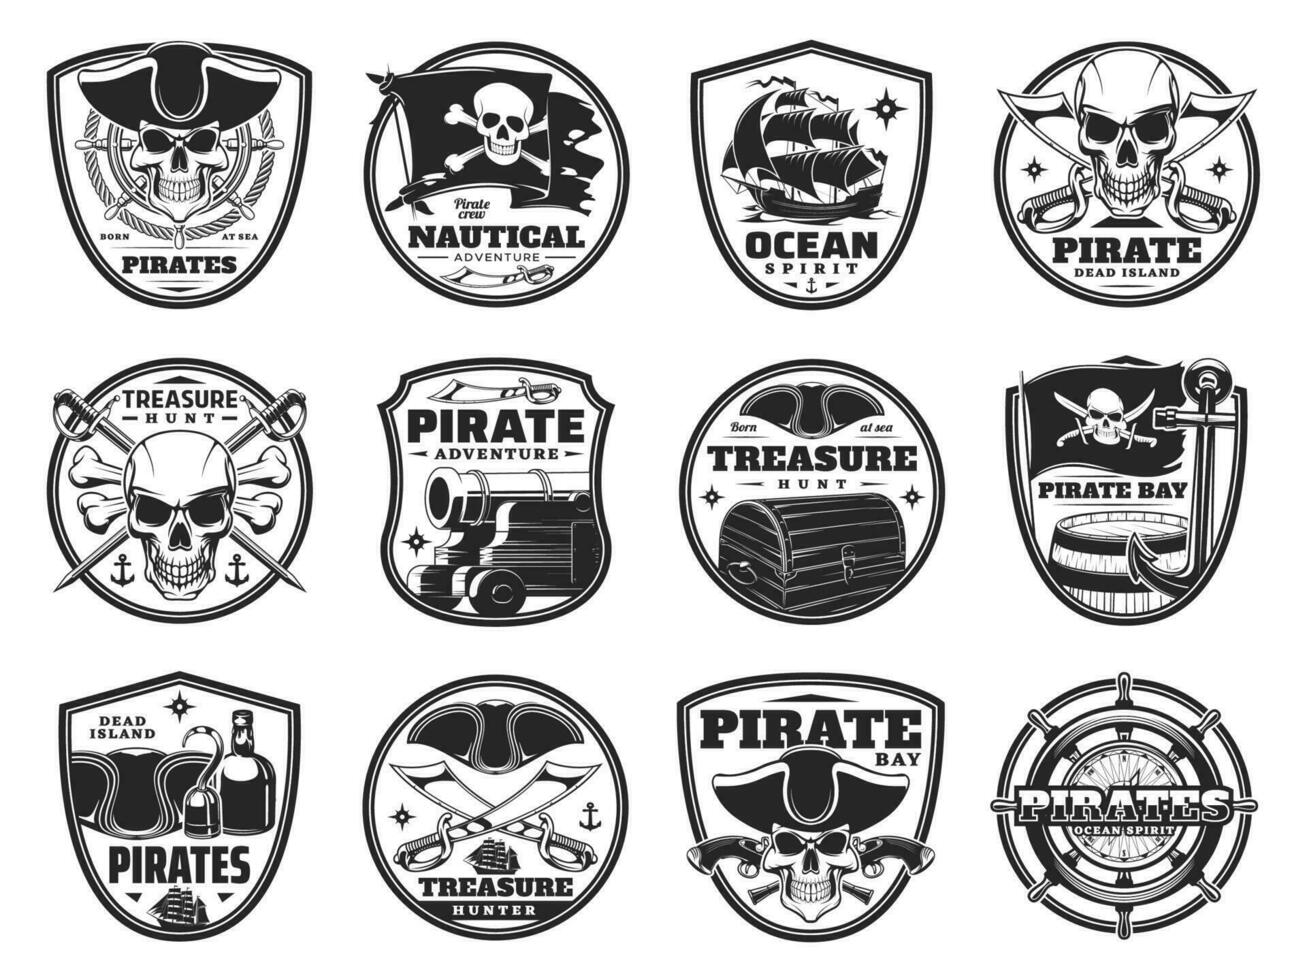 Piracy and pirate heraldic icons, vector symbols